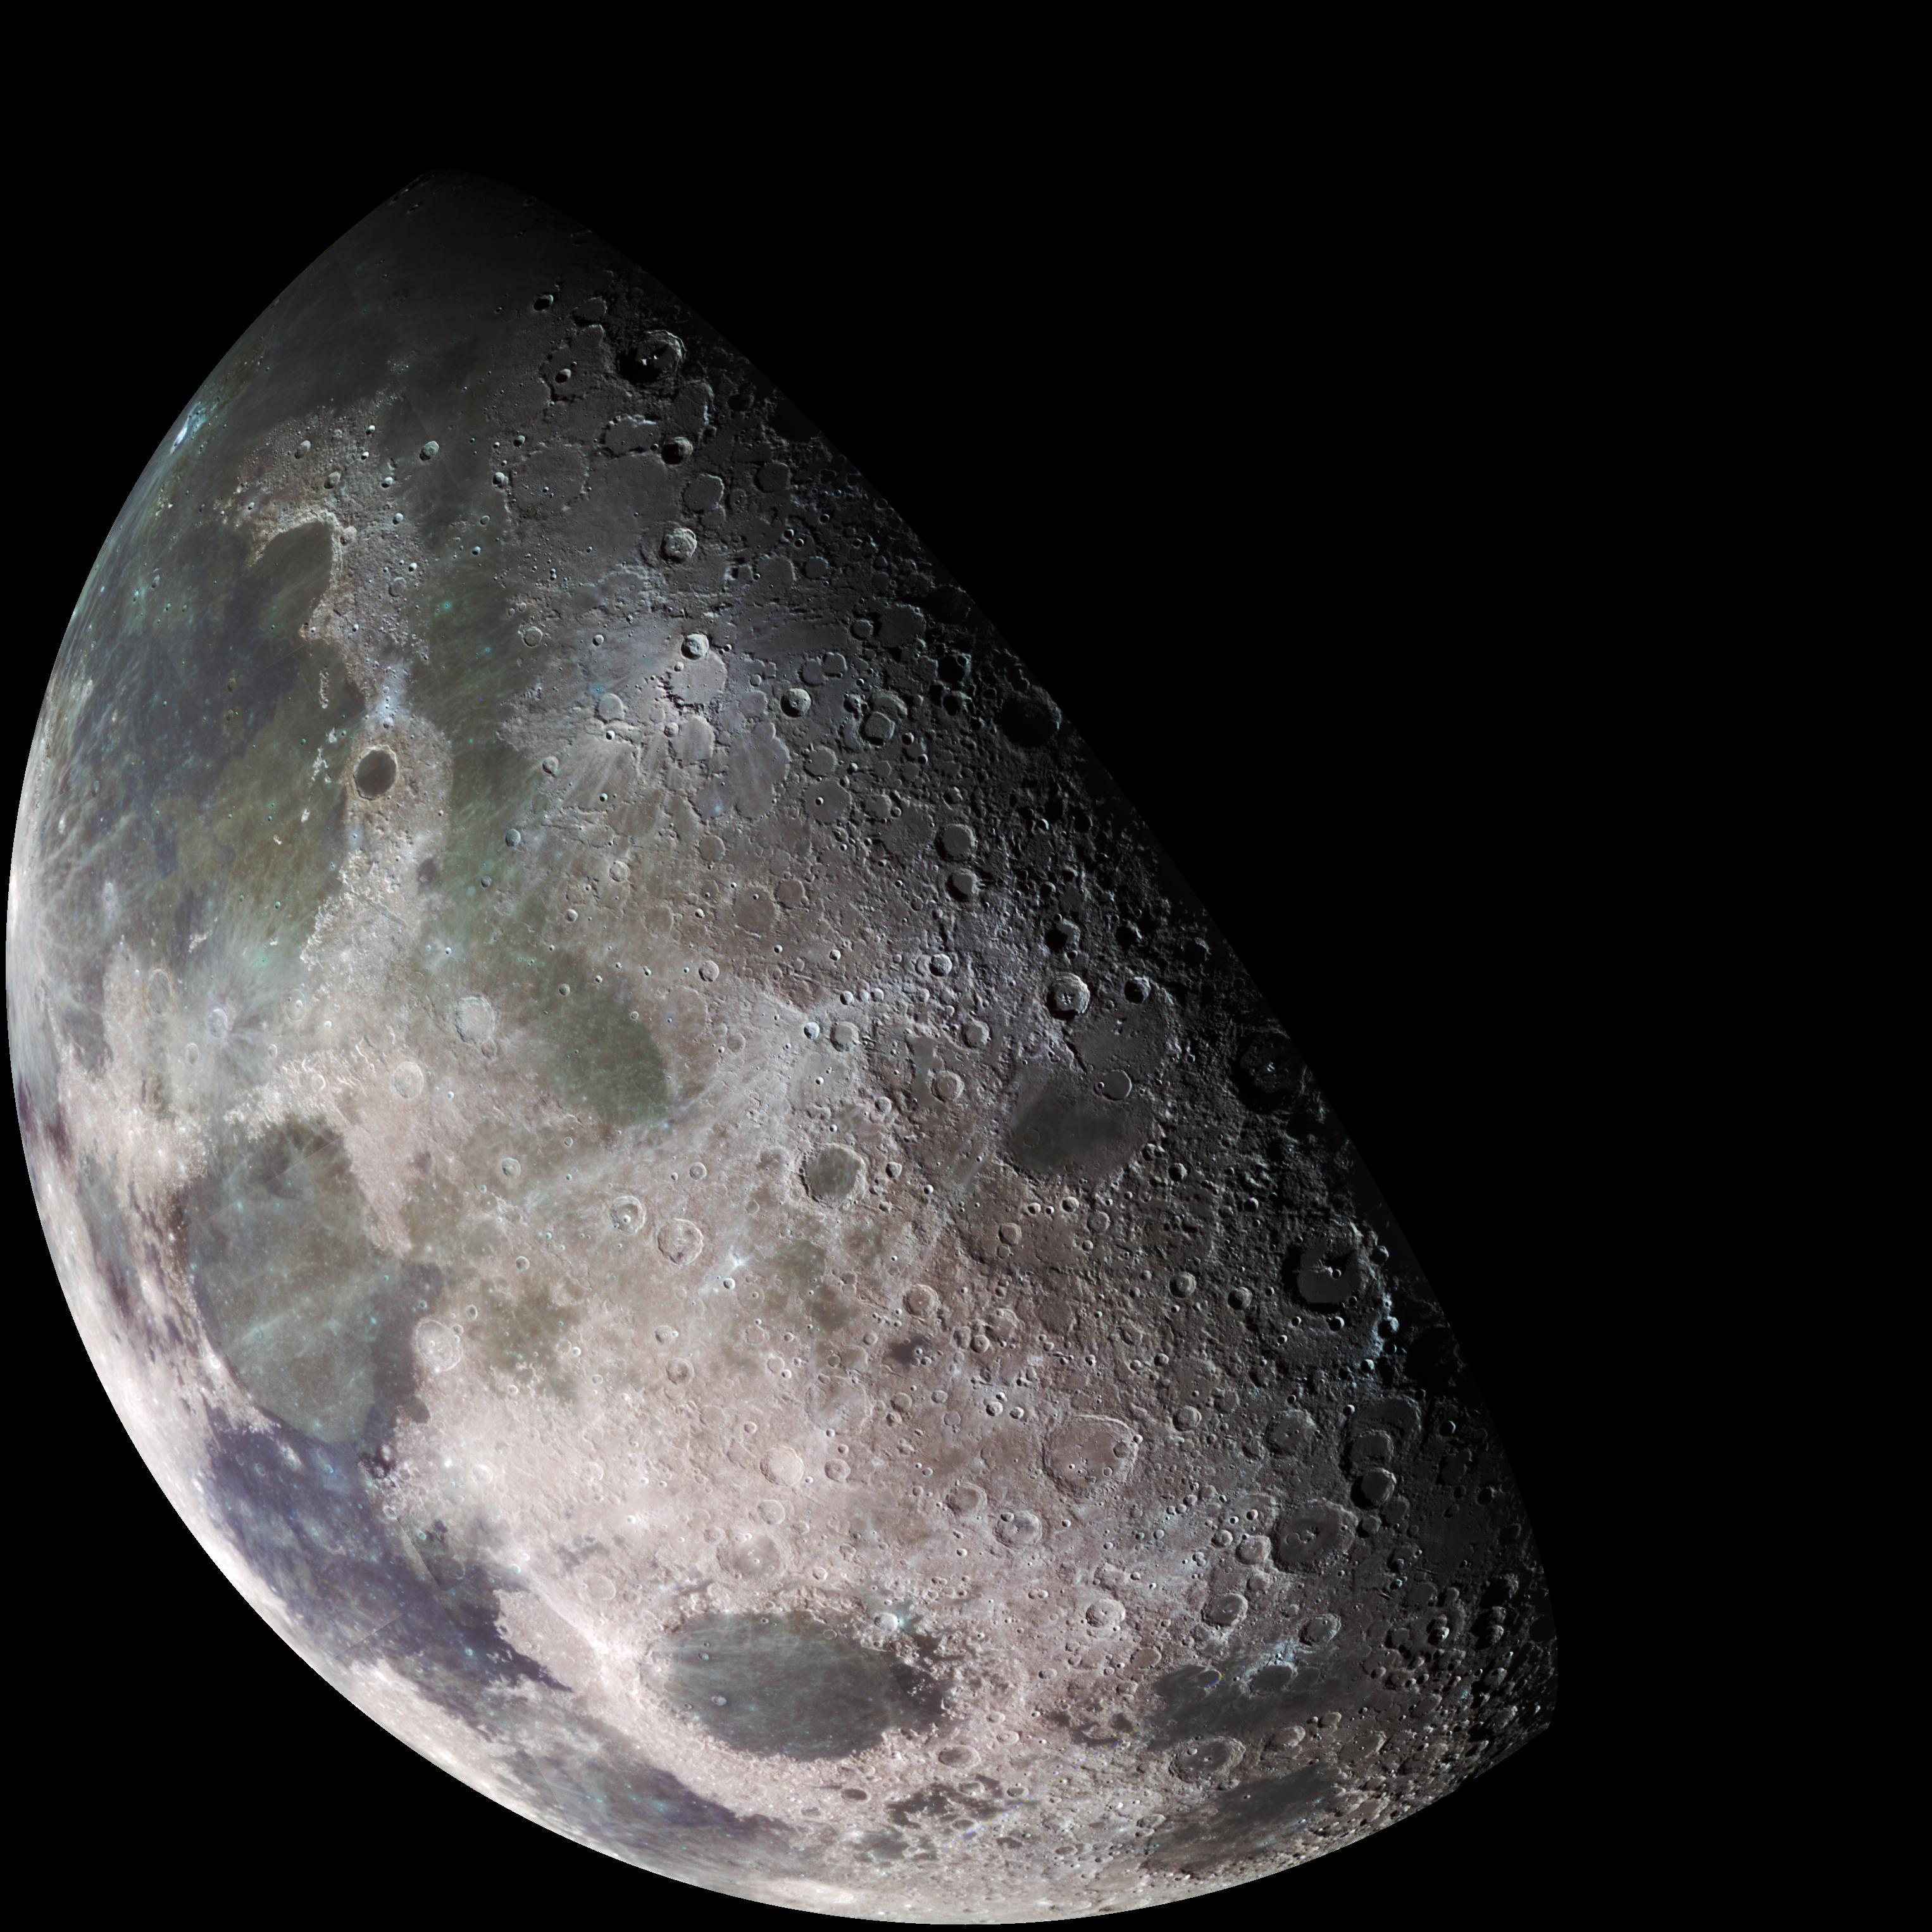 Earth's moon. Image by NASA, JPL,USGS